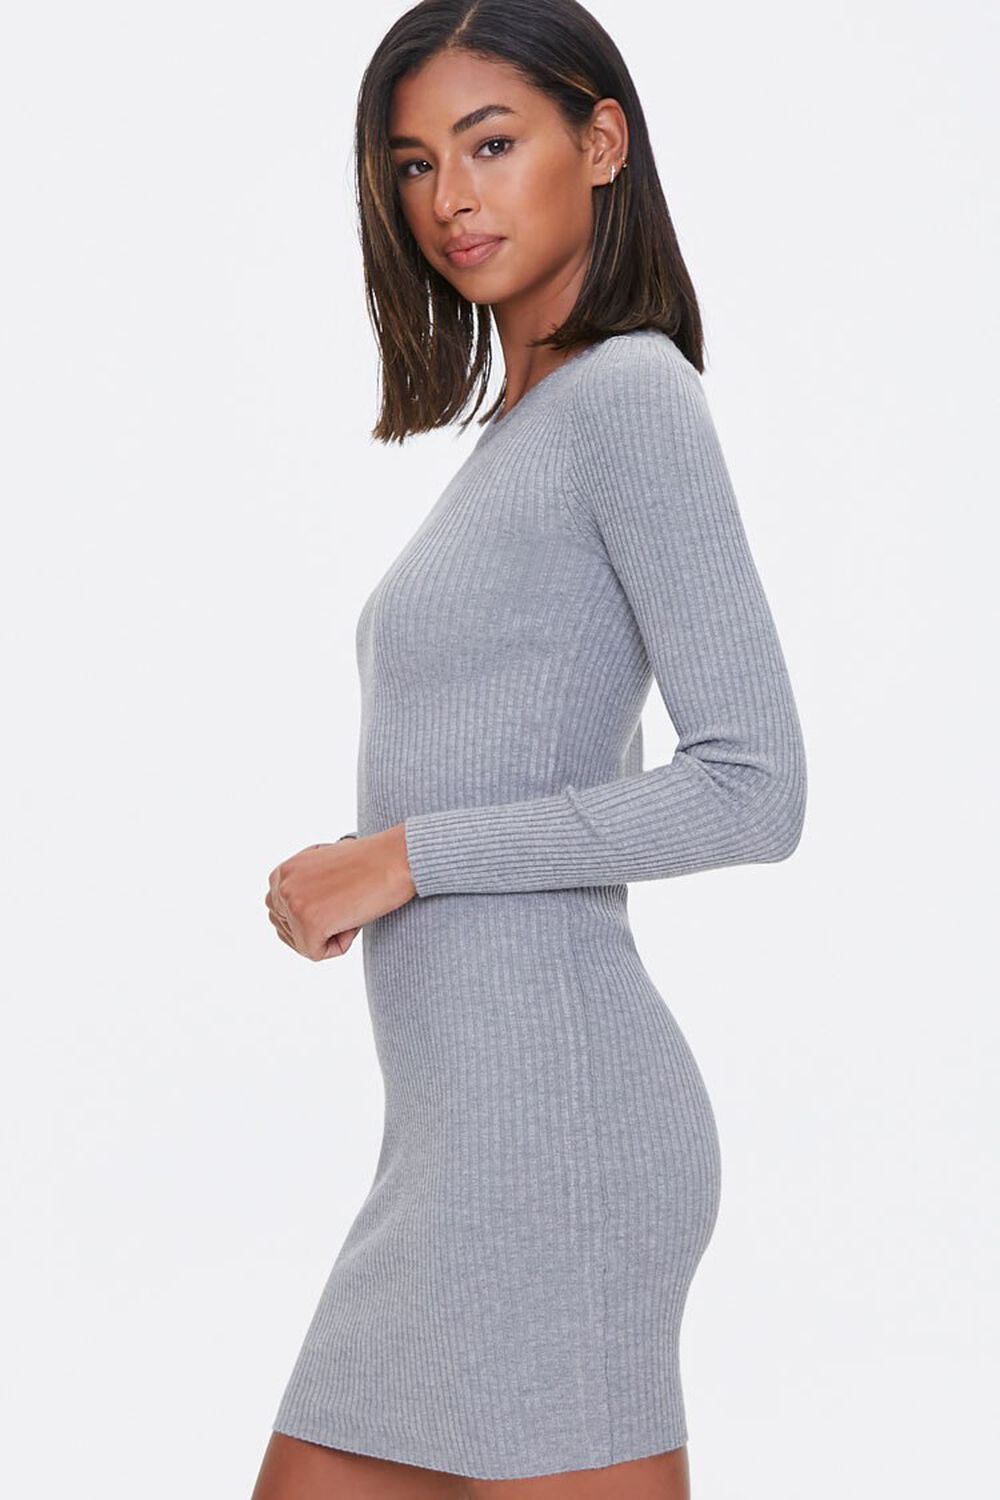 HEATHER GREY Sweater-Knit Mini Dress, image 2